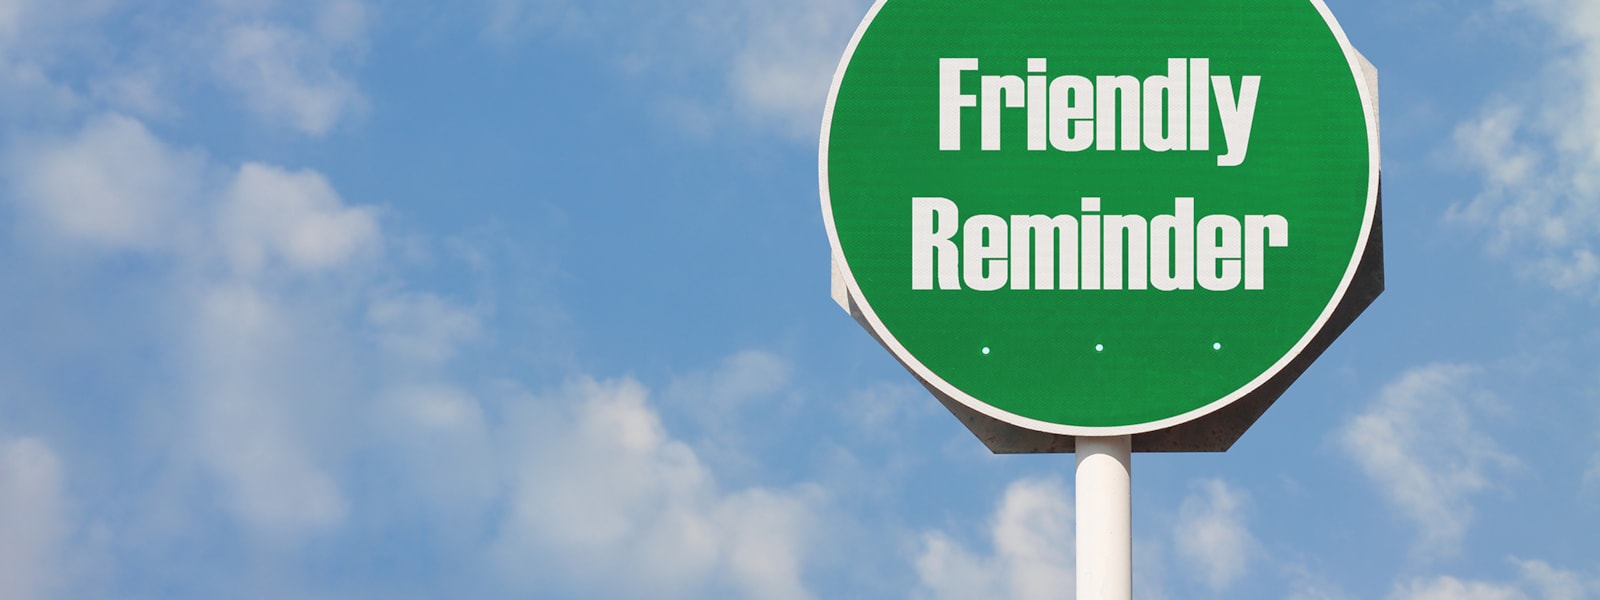 Green Sign stating "Friendly Reminder"